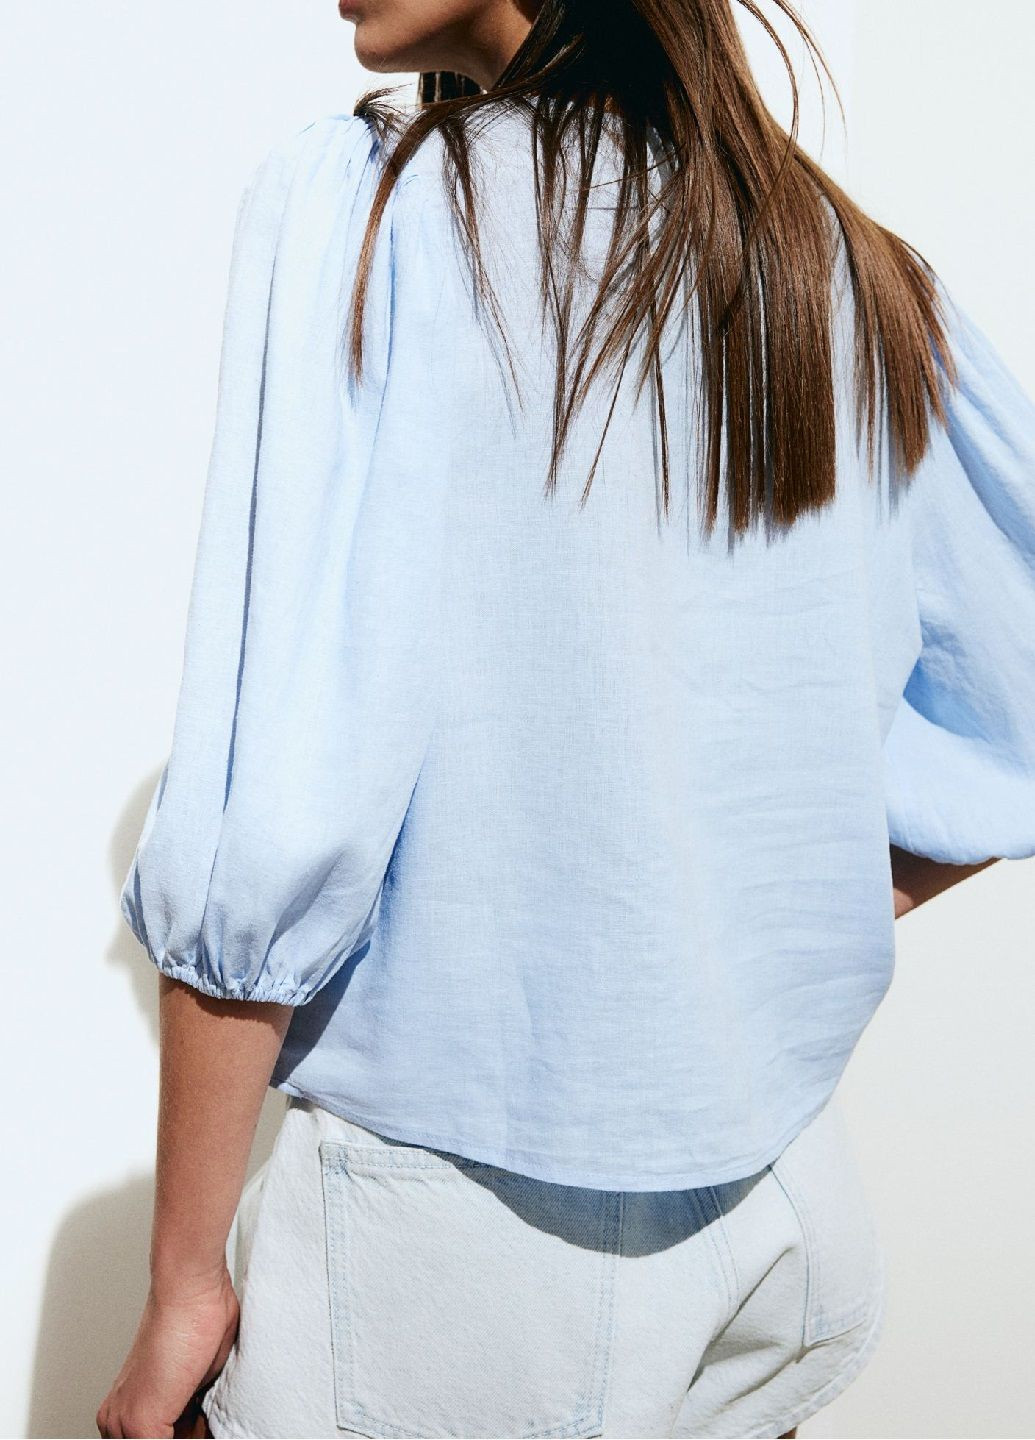 Голубая летняя блузка H&M